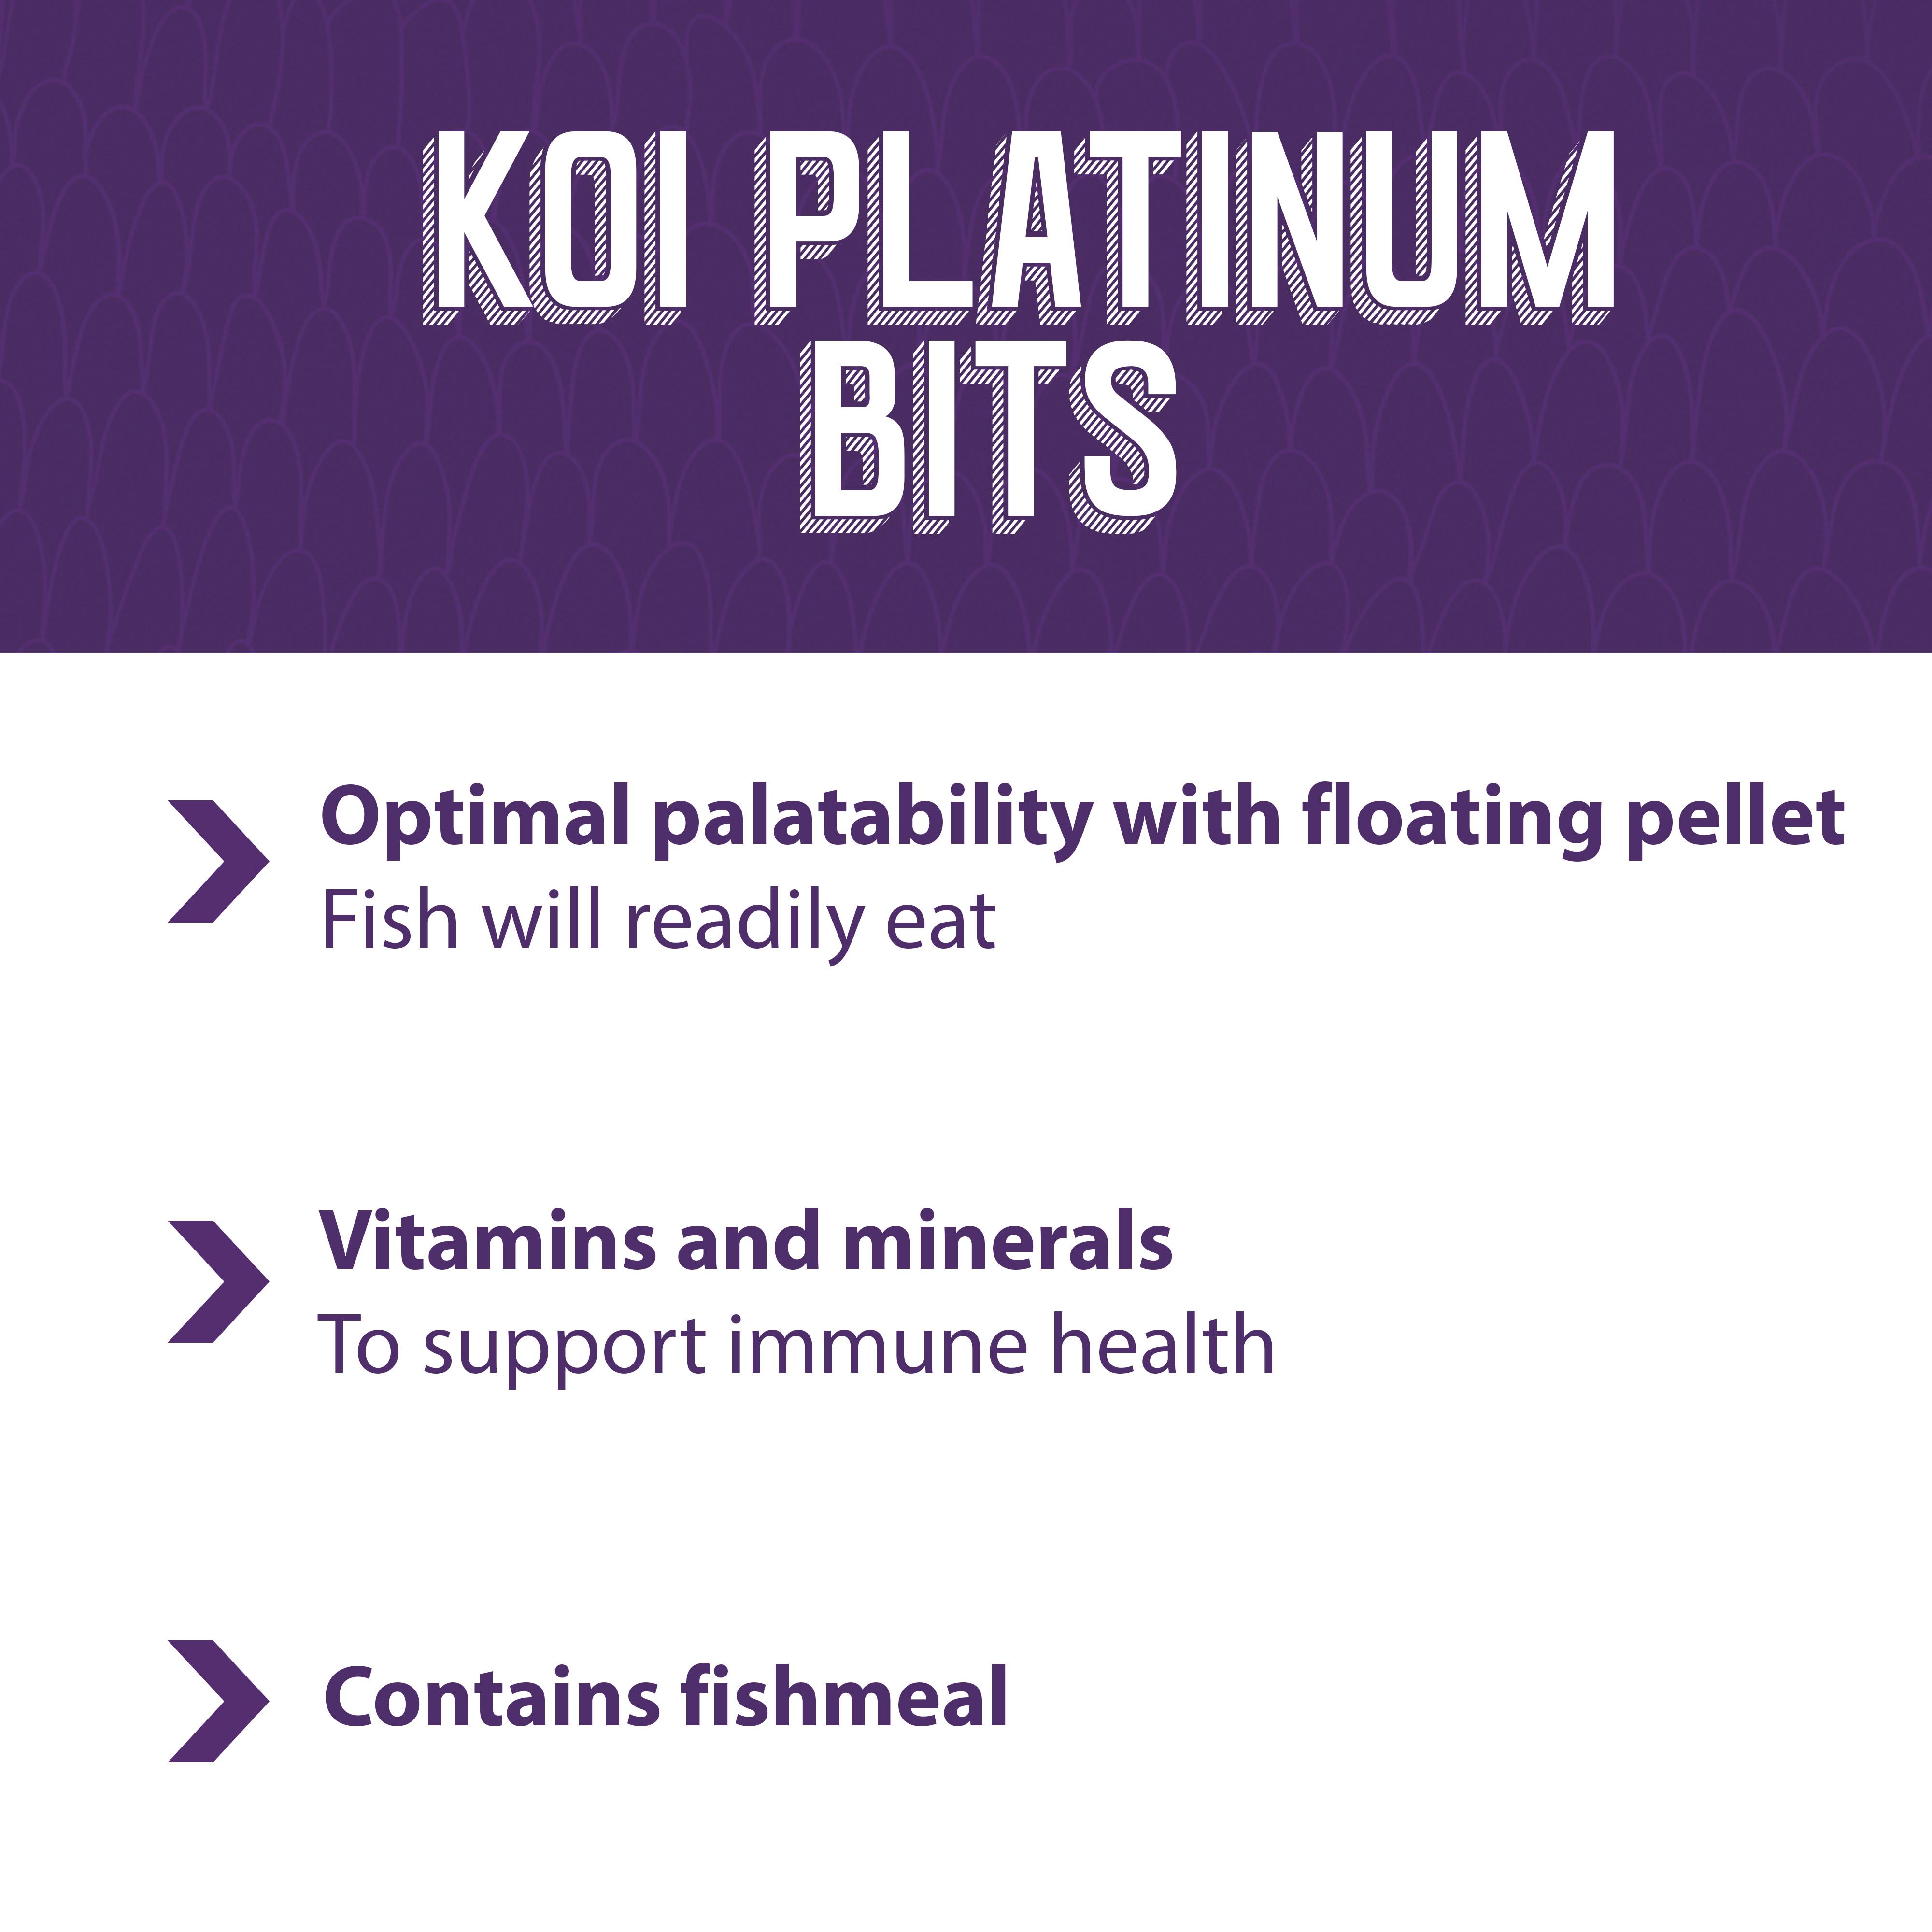 Koi platinum bits contain fishmeal